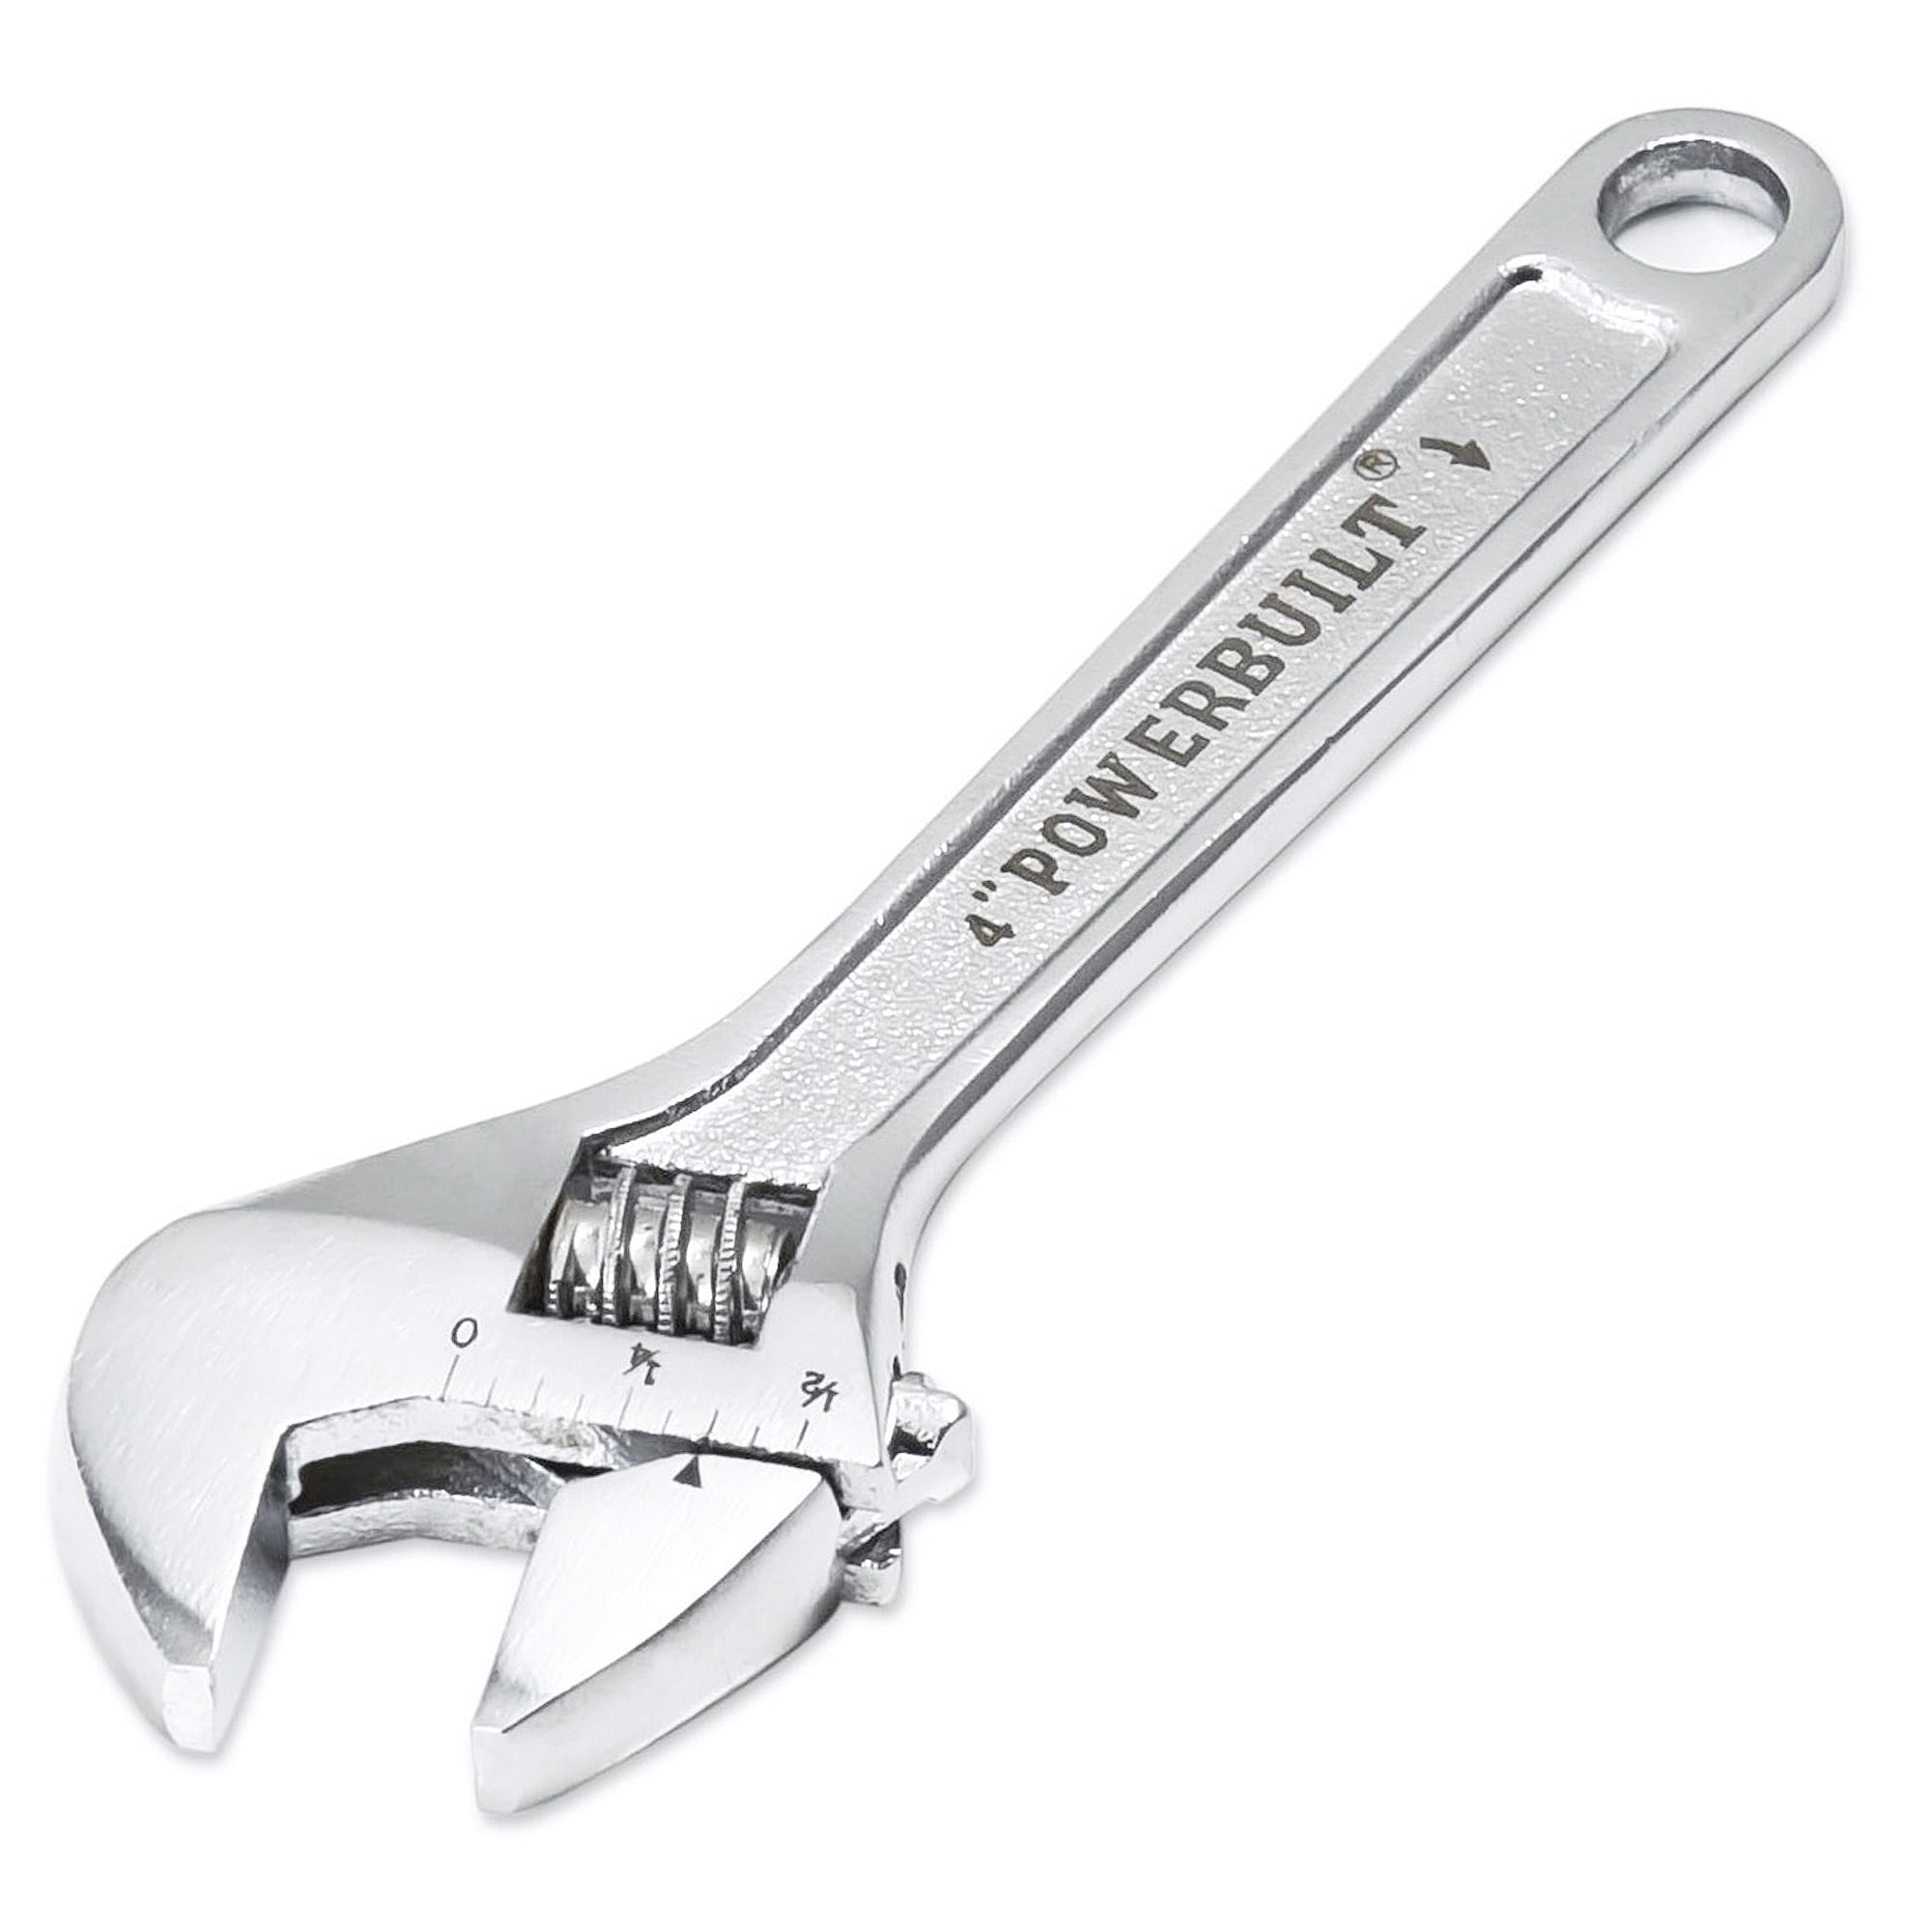 TEKTON 4 Inch Adjustable Wrench | 23001 - Walmart.com